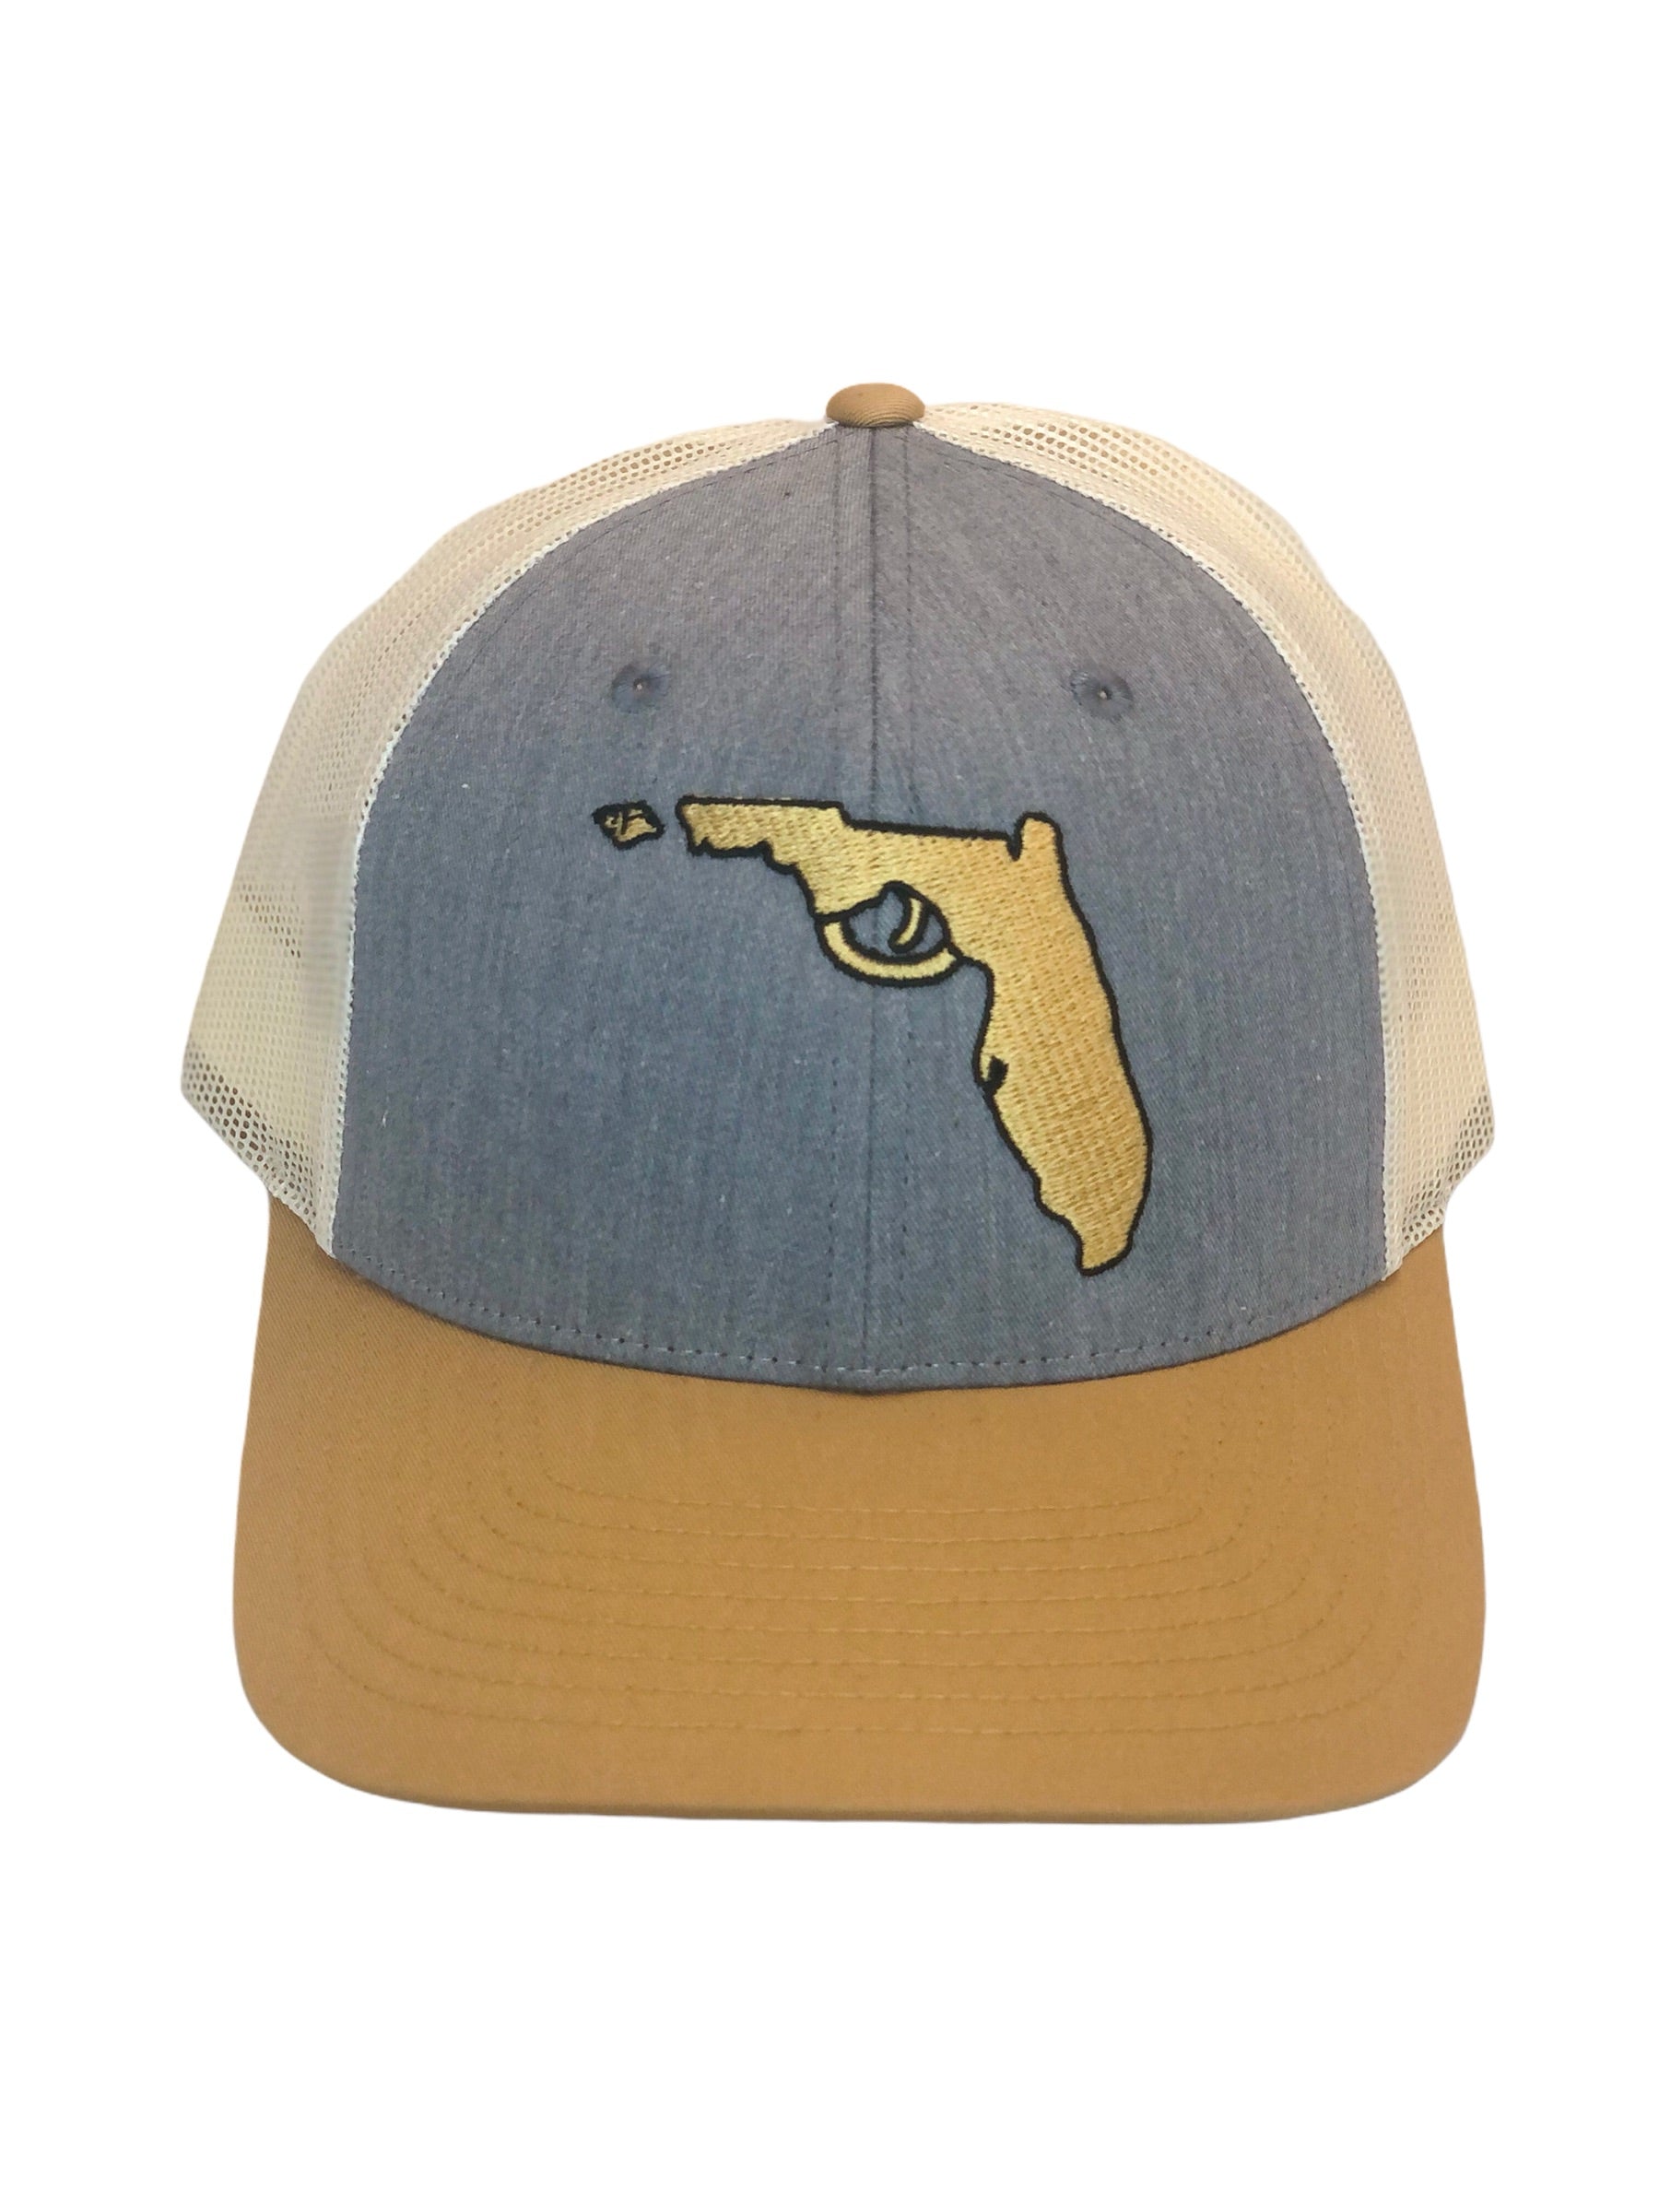 gold and gray florida gun hat